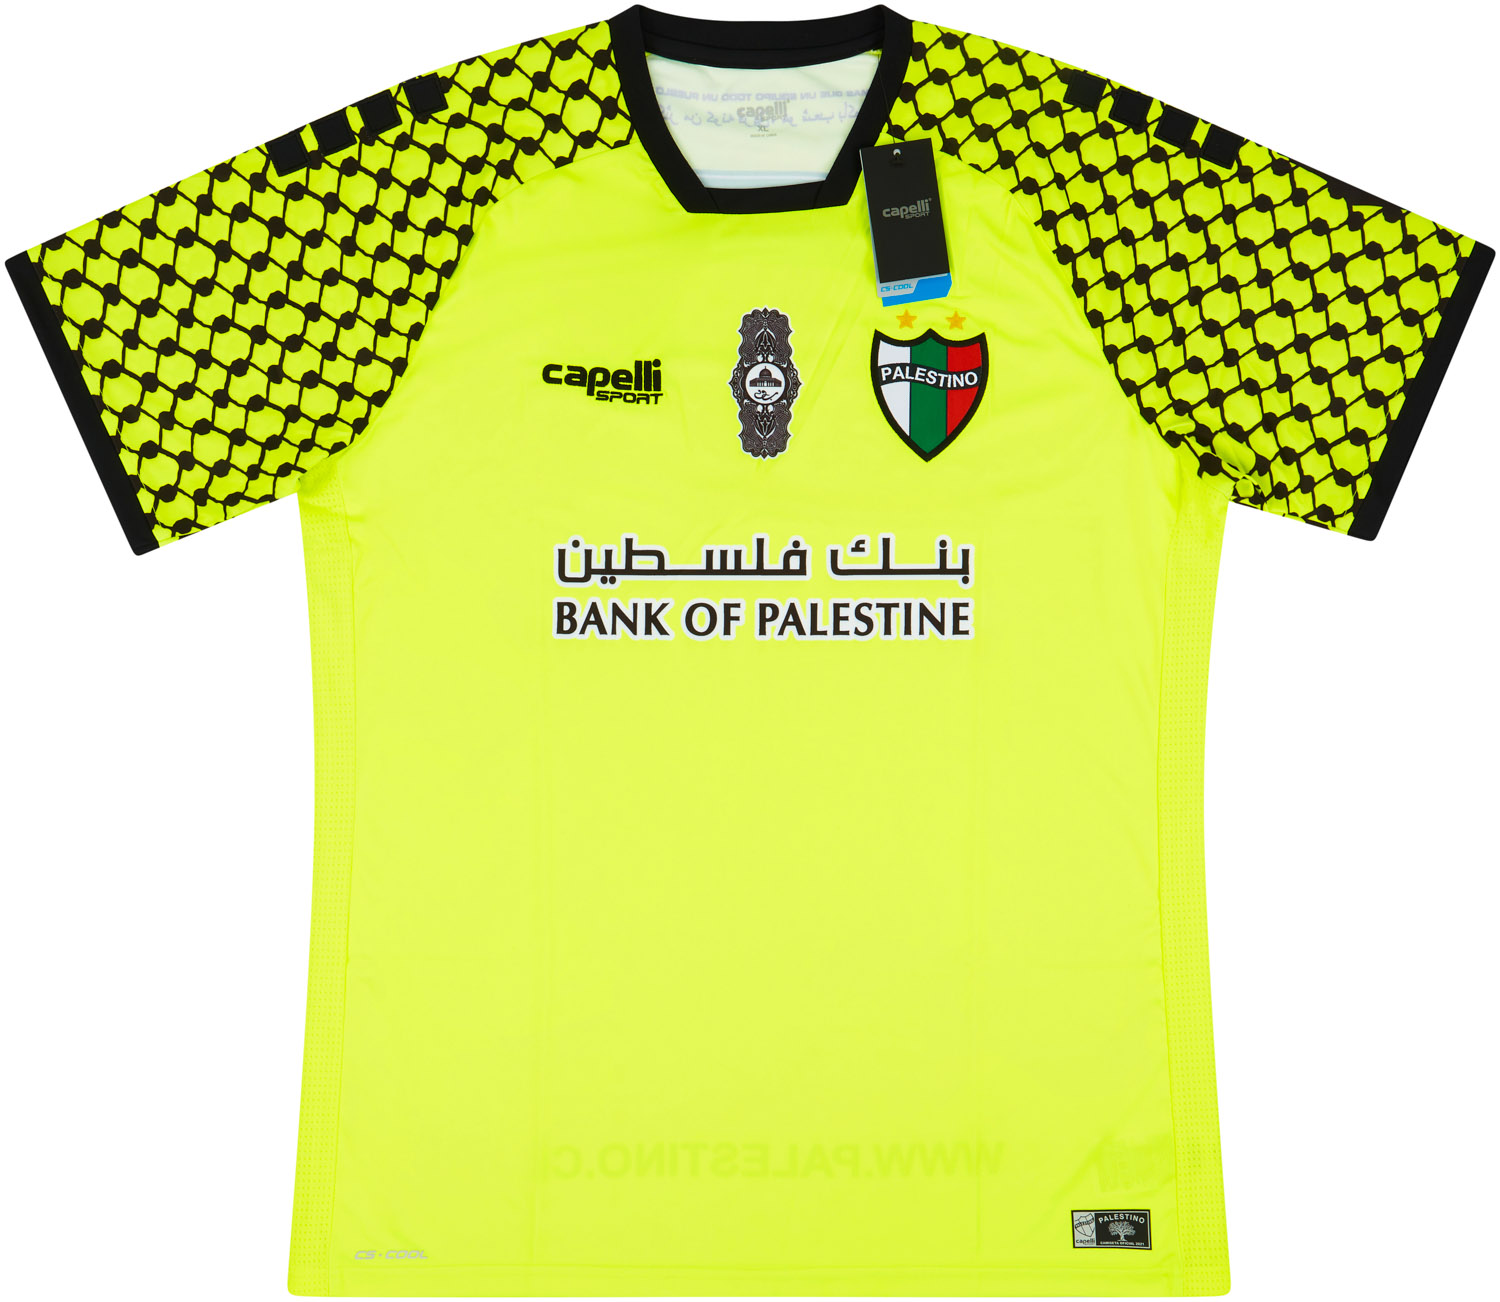 Palestino Goalkeeper shirt